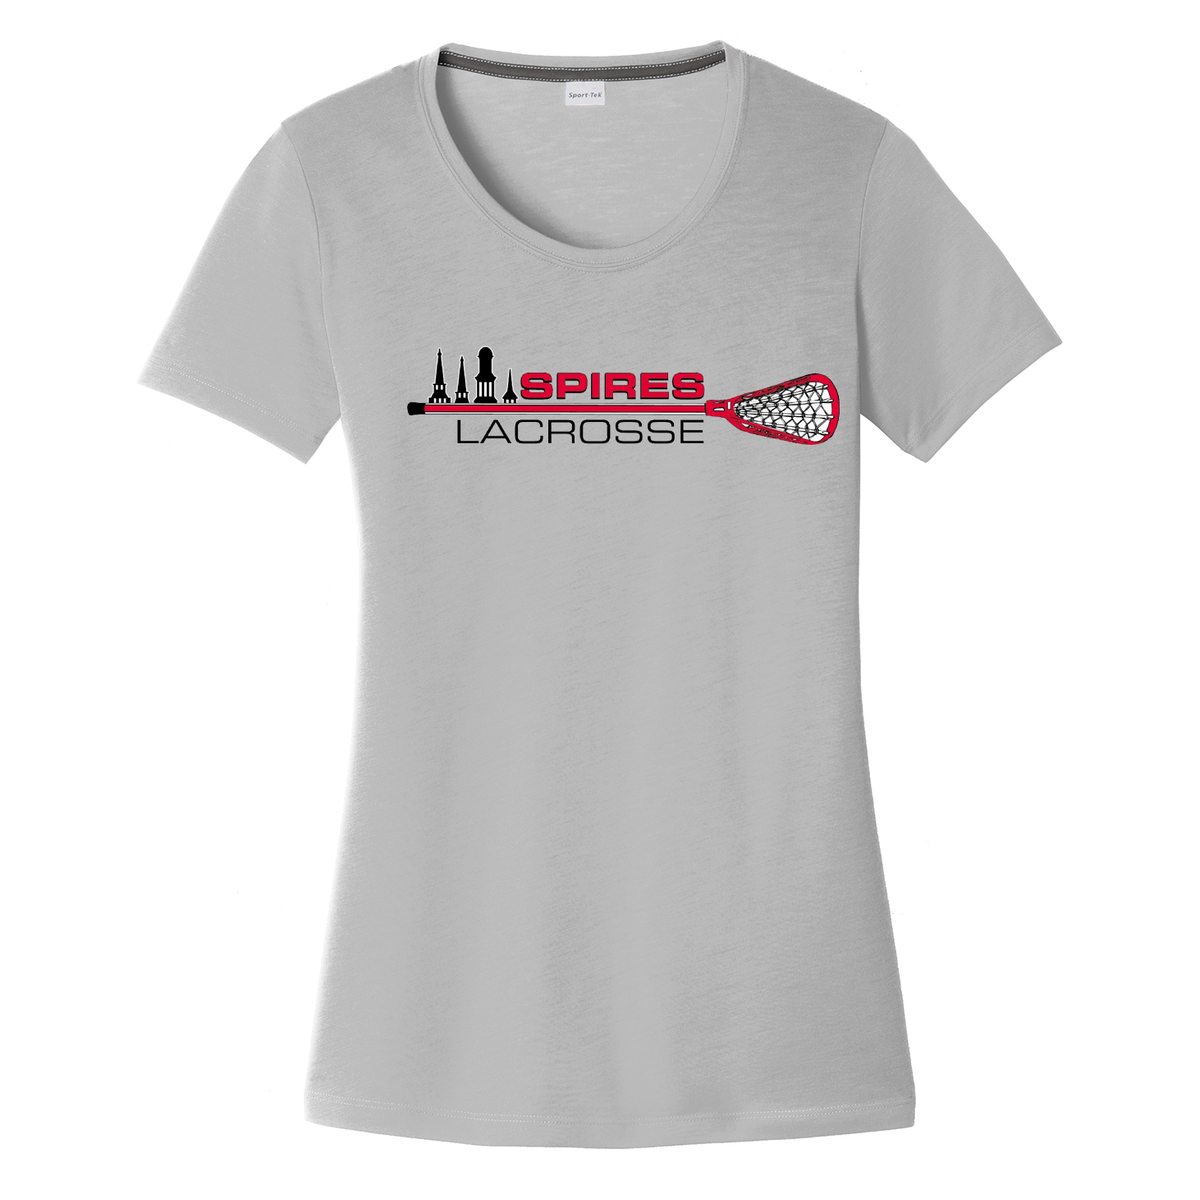 Spires Lacrosse Women's CottonTouch Performance T-Shirt